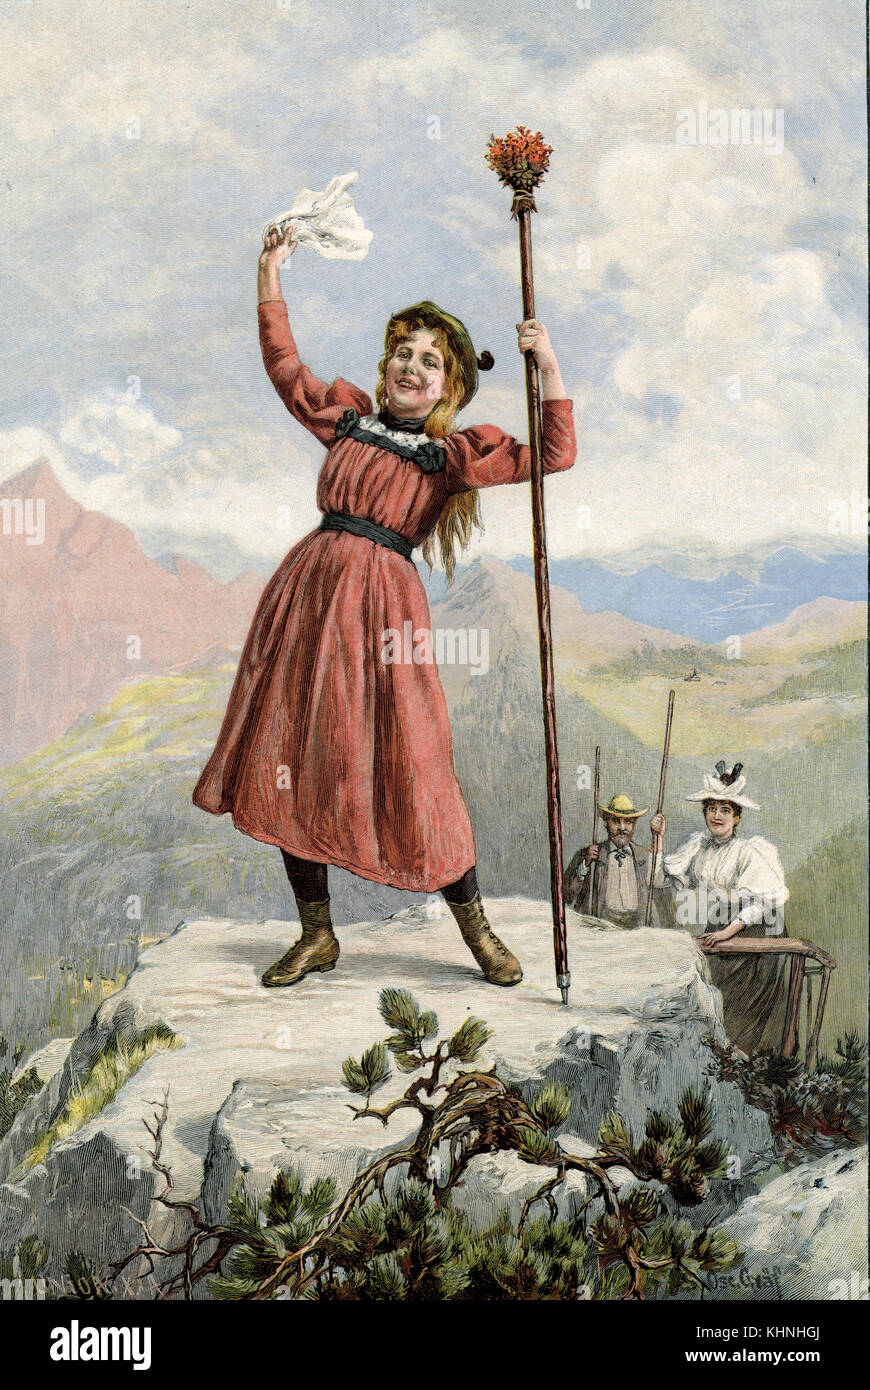 Young woman triumphantly reaches mountaintop (Junge Frau erreicht triumphierend die Bergspitze) Stock Photo